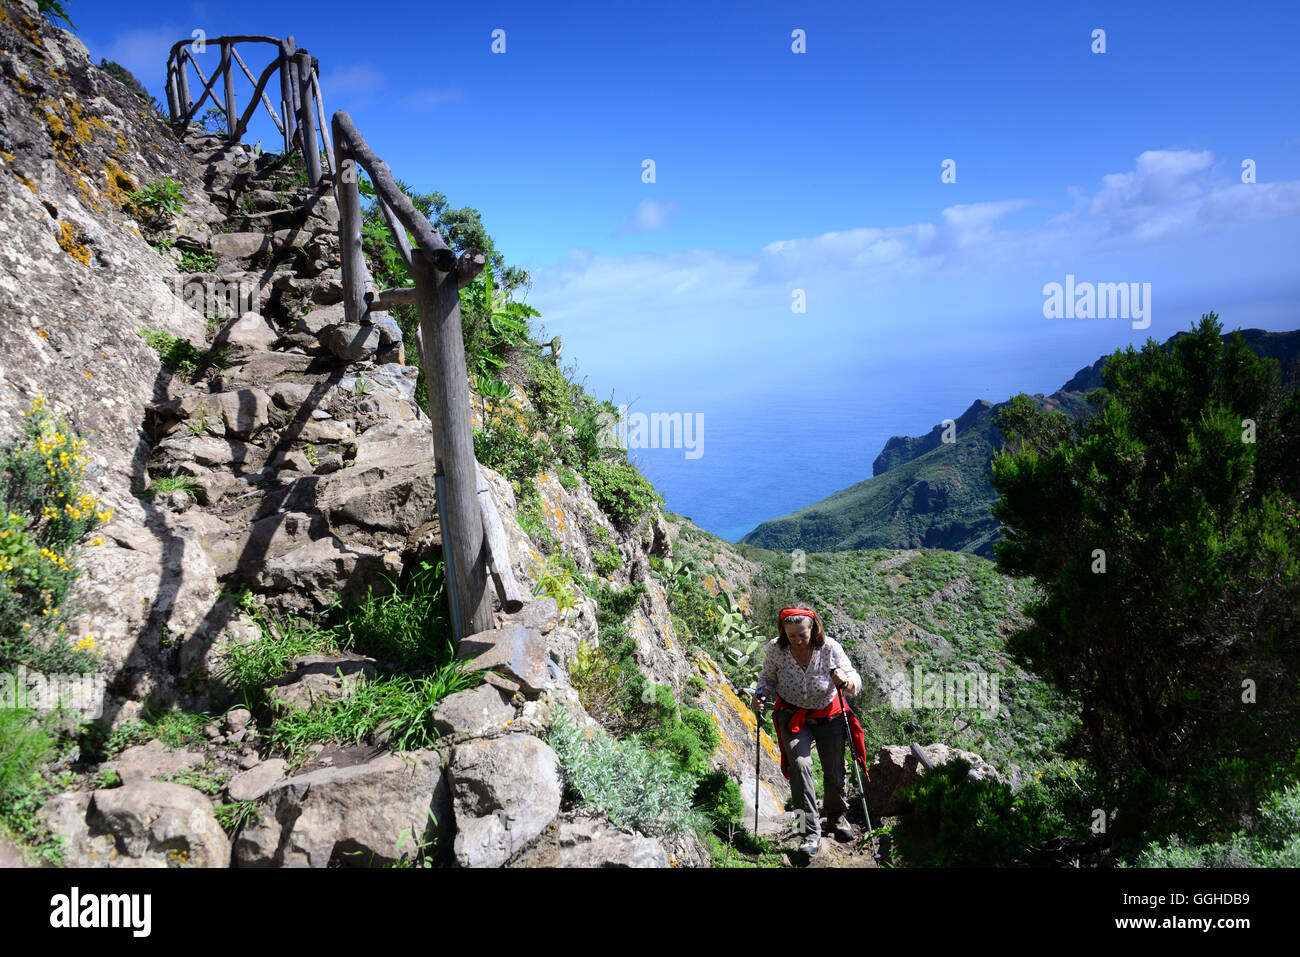 Woman hiking uphill, Macizo de Anaga mountain range, Chamorga, Tenerife, Canary Islands, Spain Stock Photo